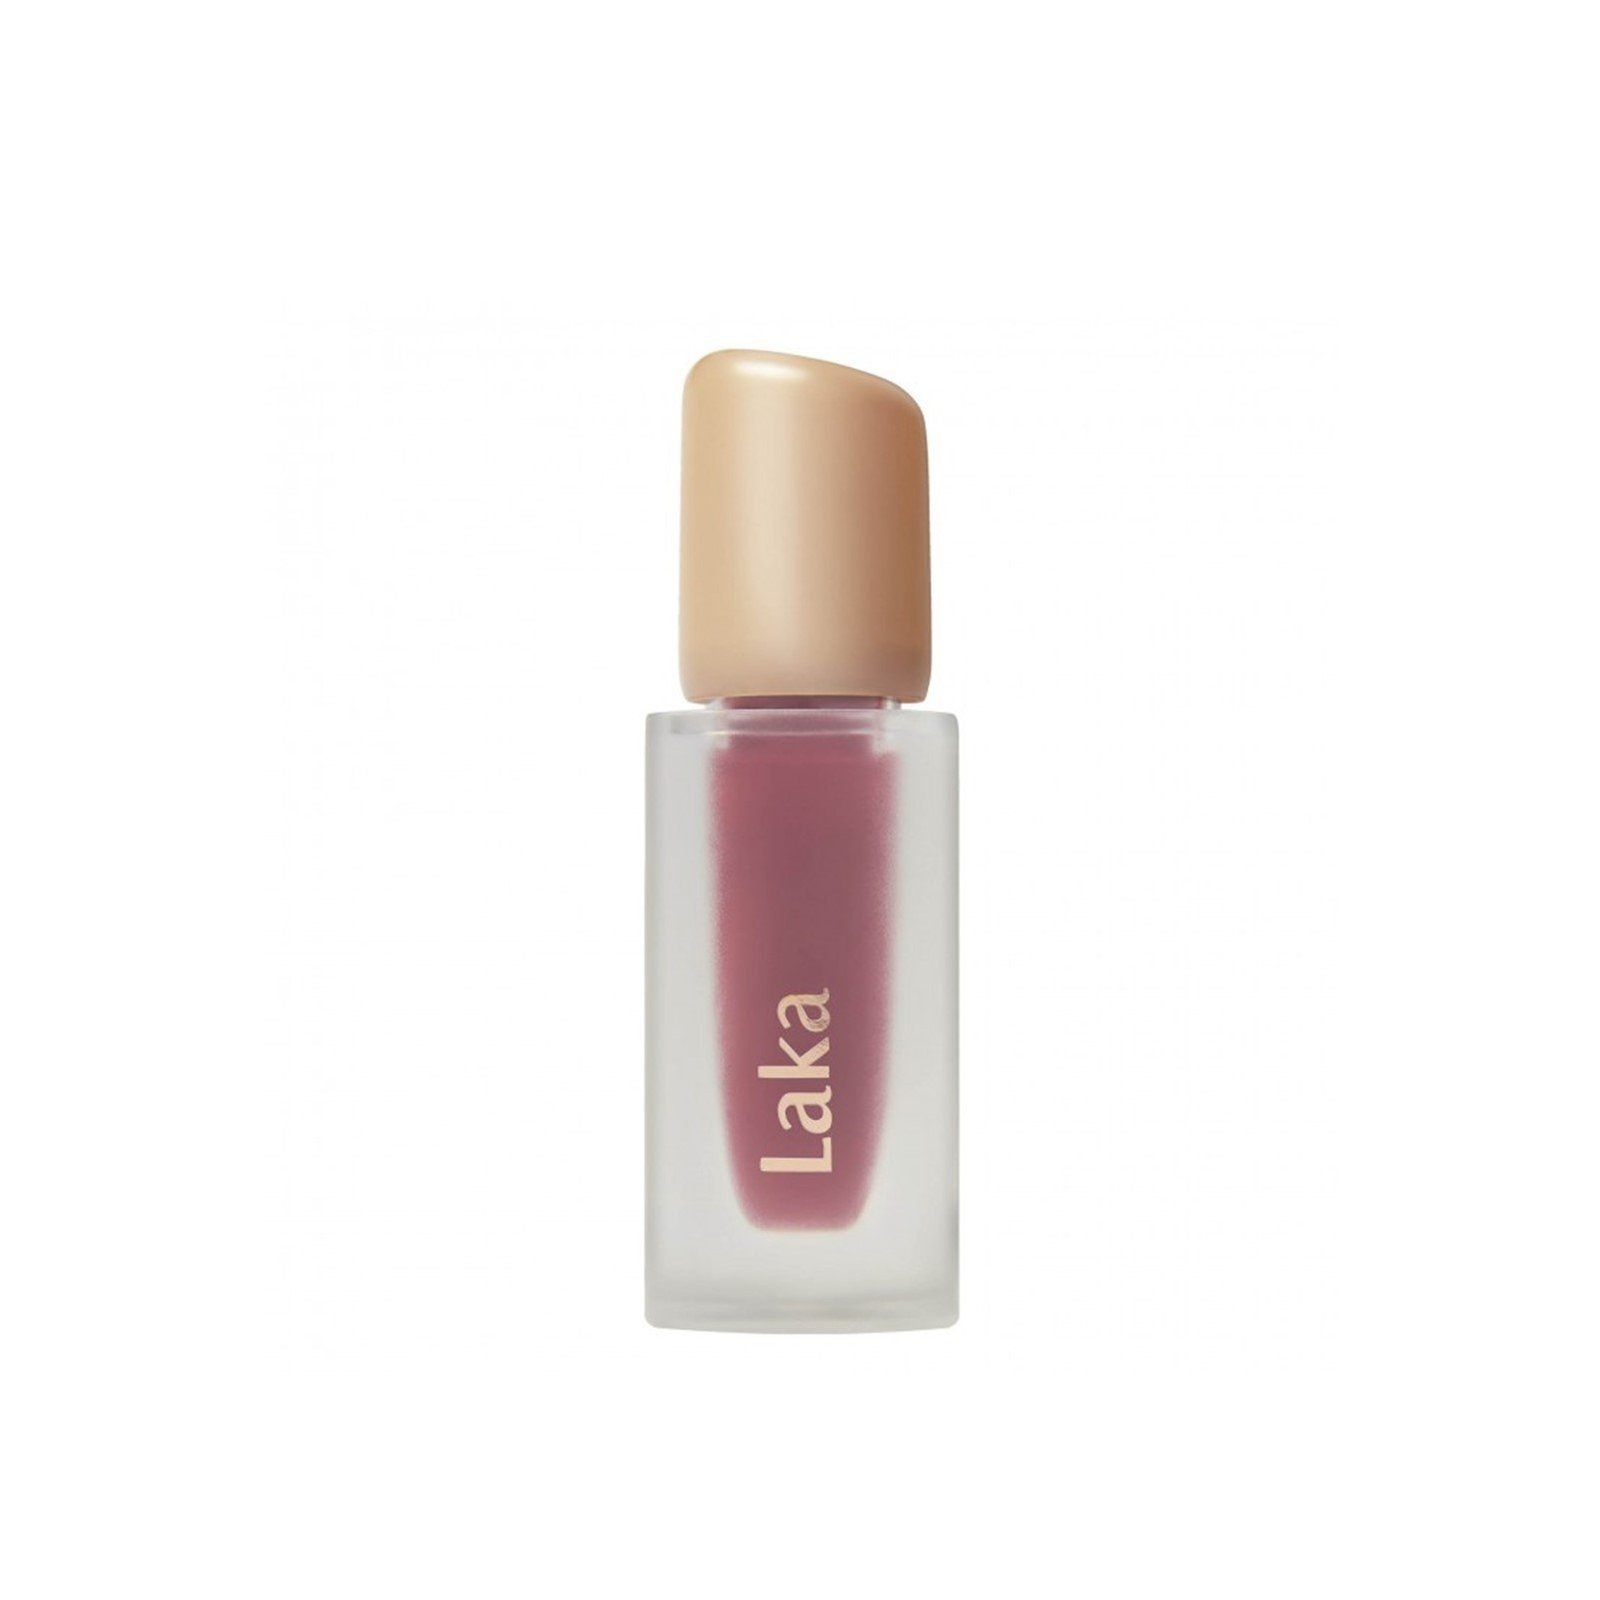 Laka Fruity Glam Lip Tint 111 Mellow 4.5g (0.15 oz)